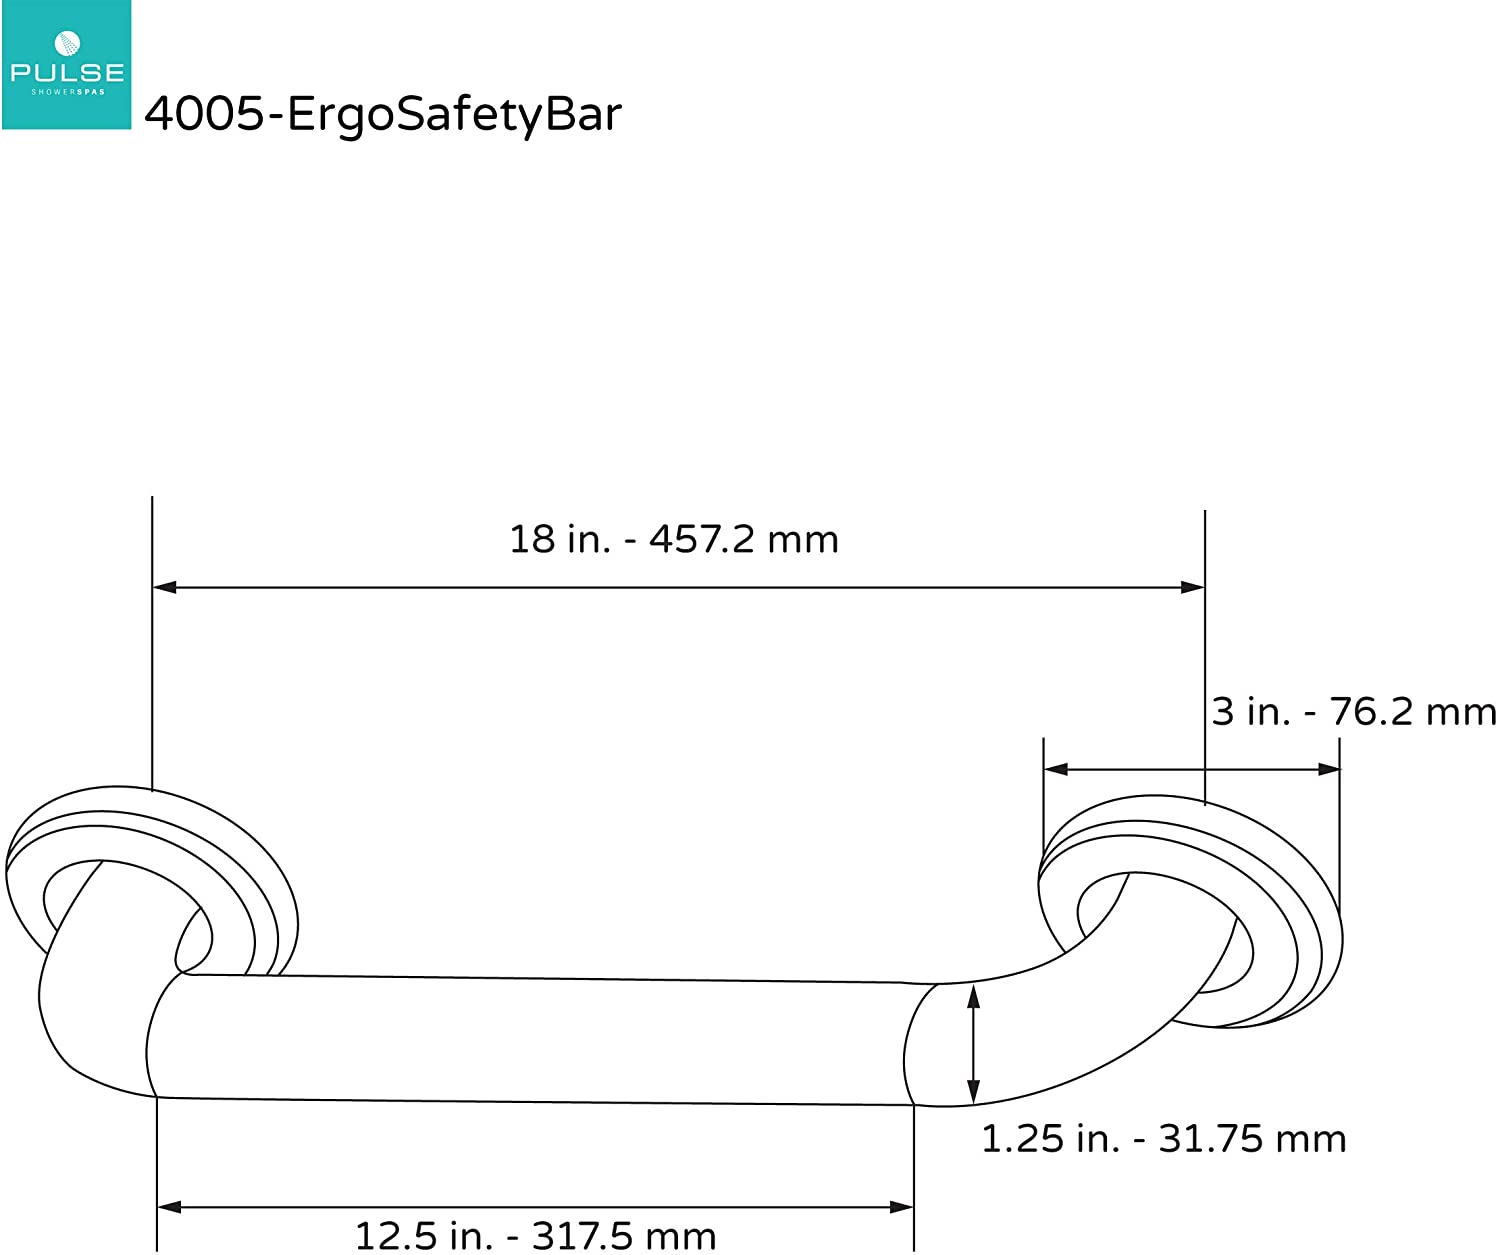 Pulse 4005 ErgoSafetyBar Shower Safety Grab Bar (ADA Compliant)